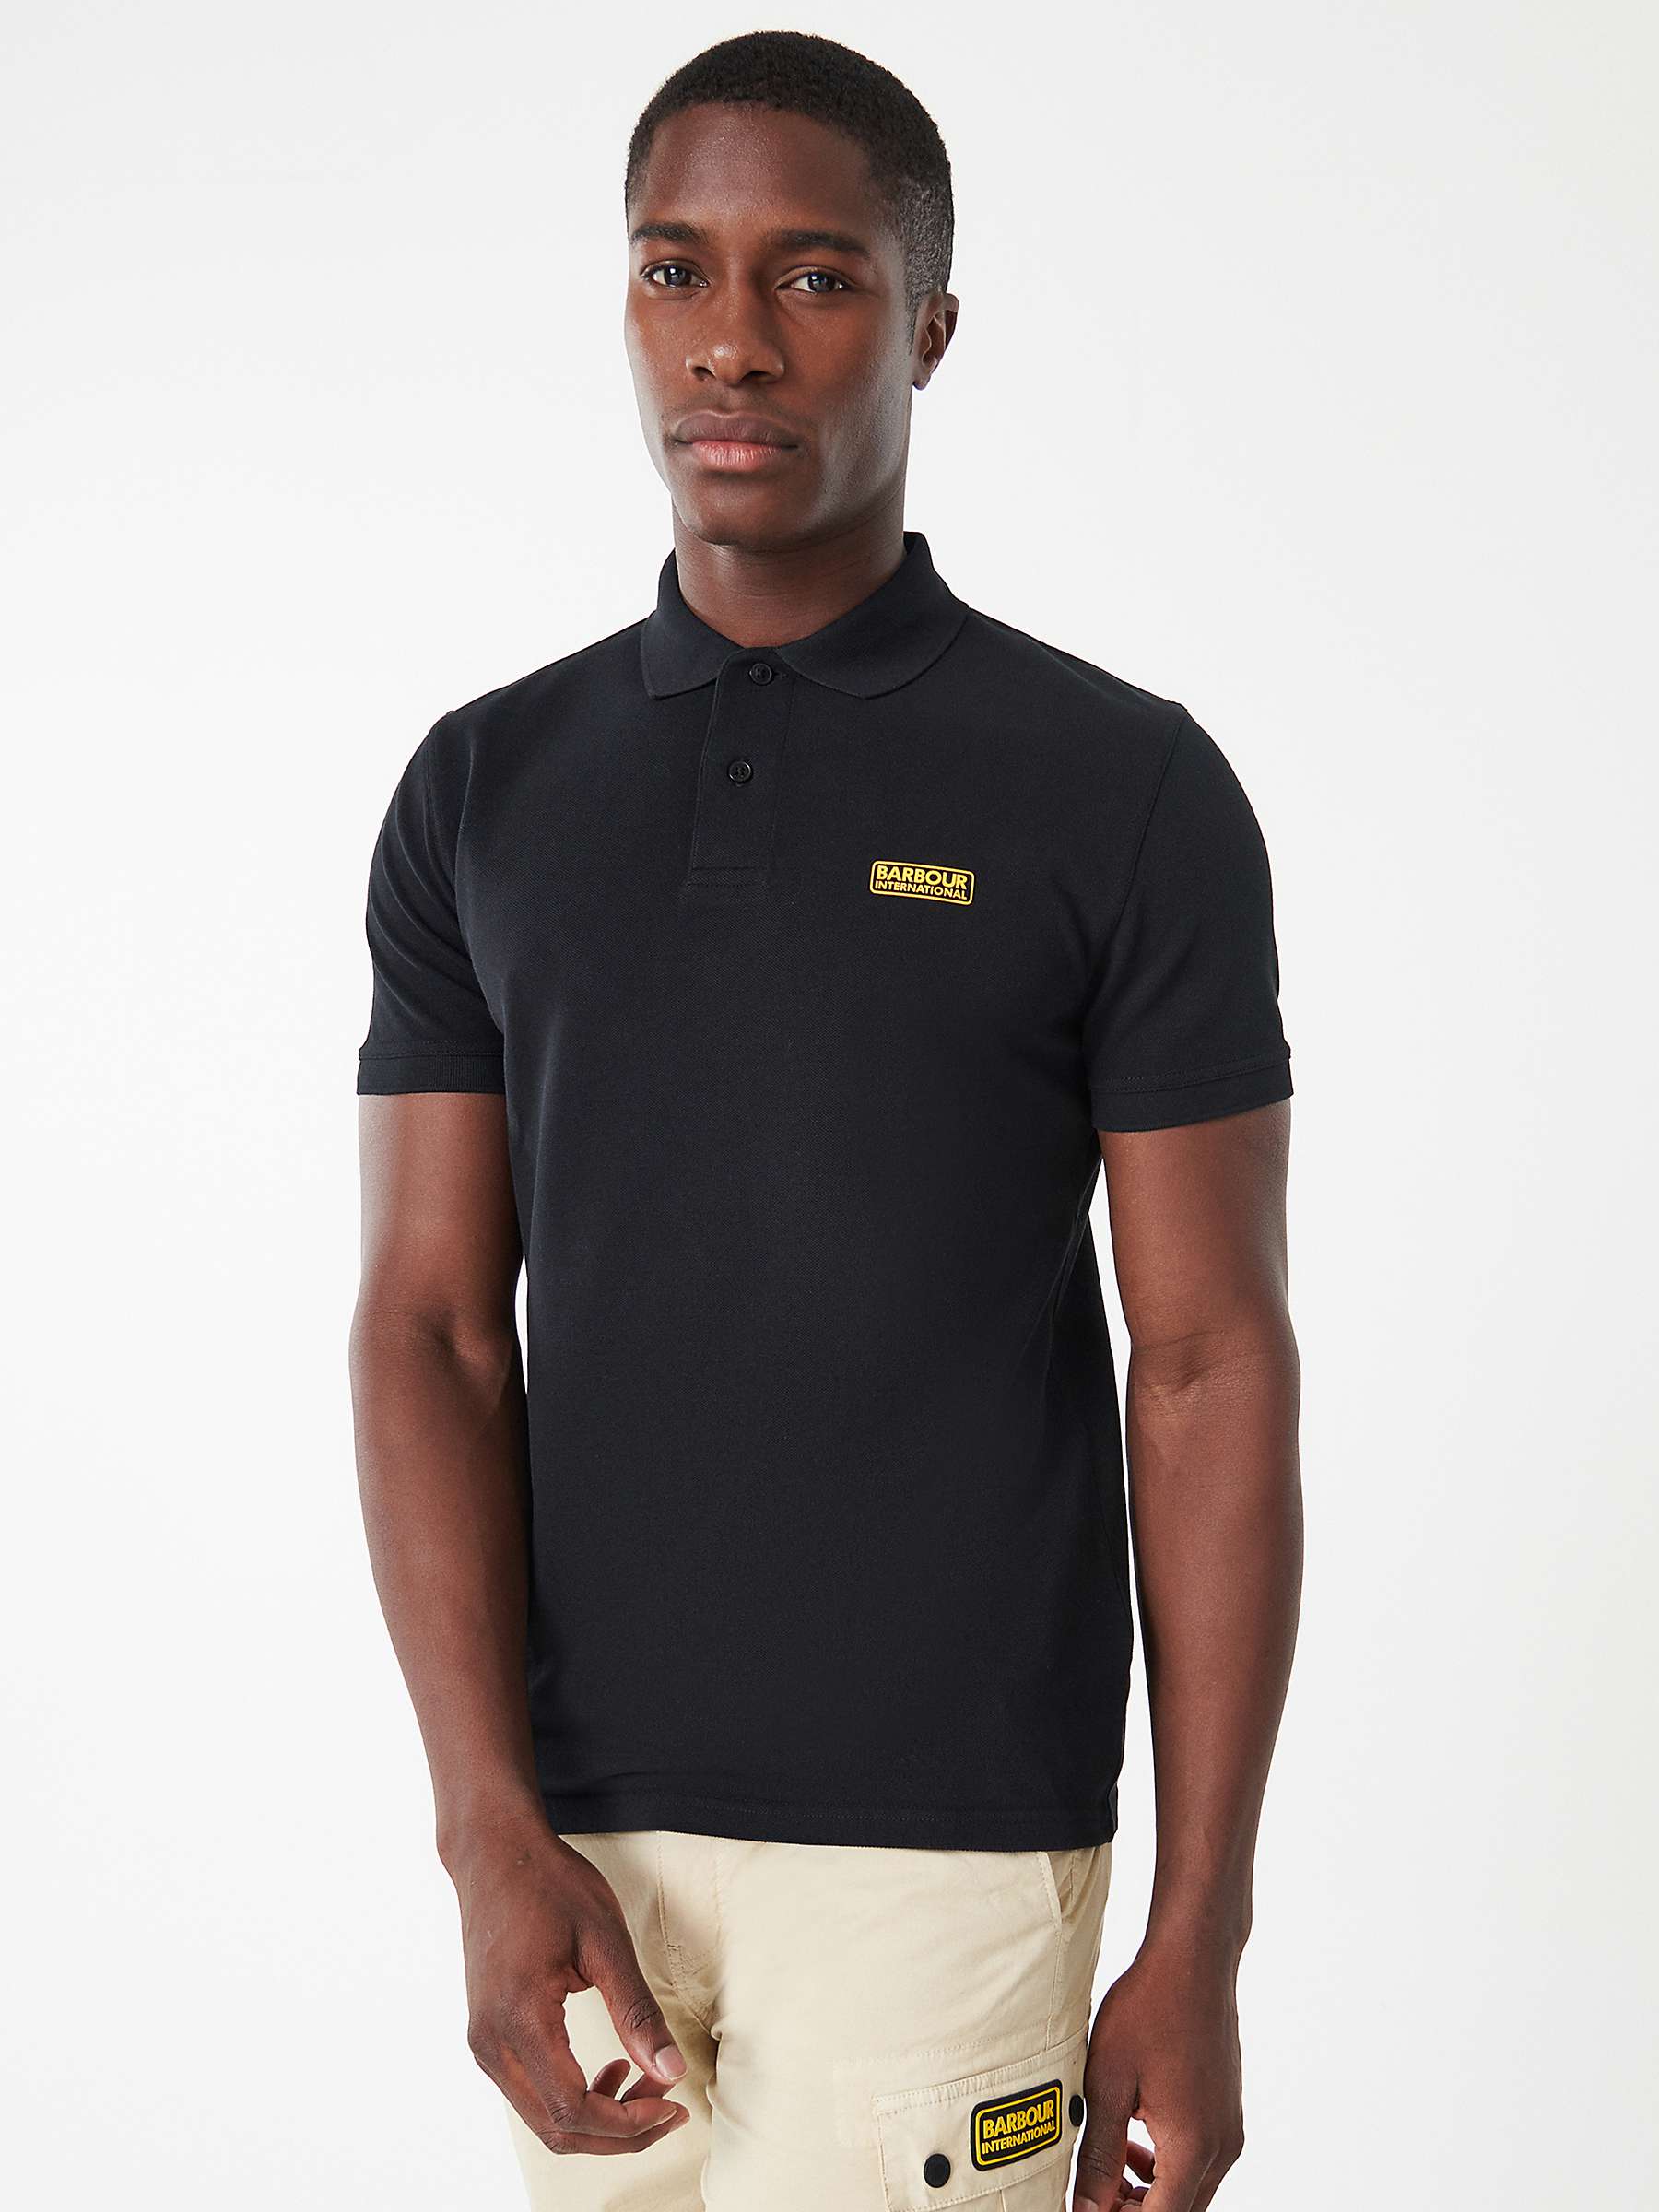 Buy Barbour International Essential Polo Shirt, Black Online at johnlewis.com